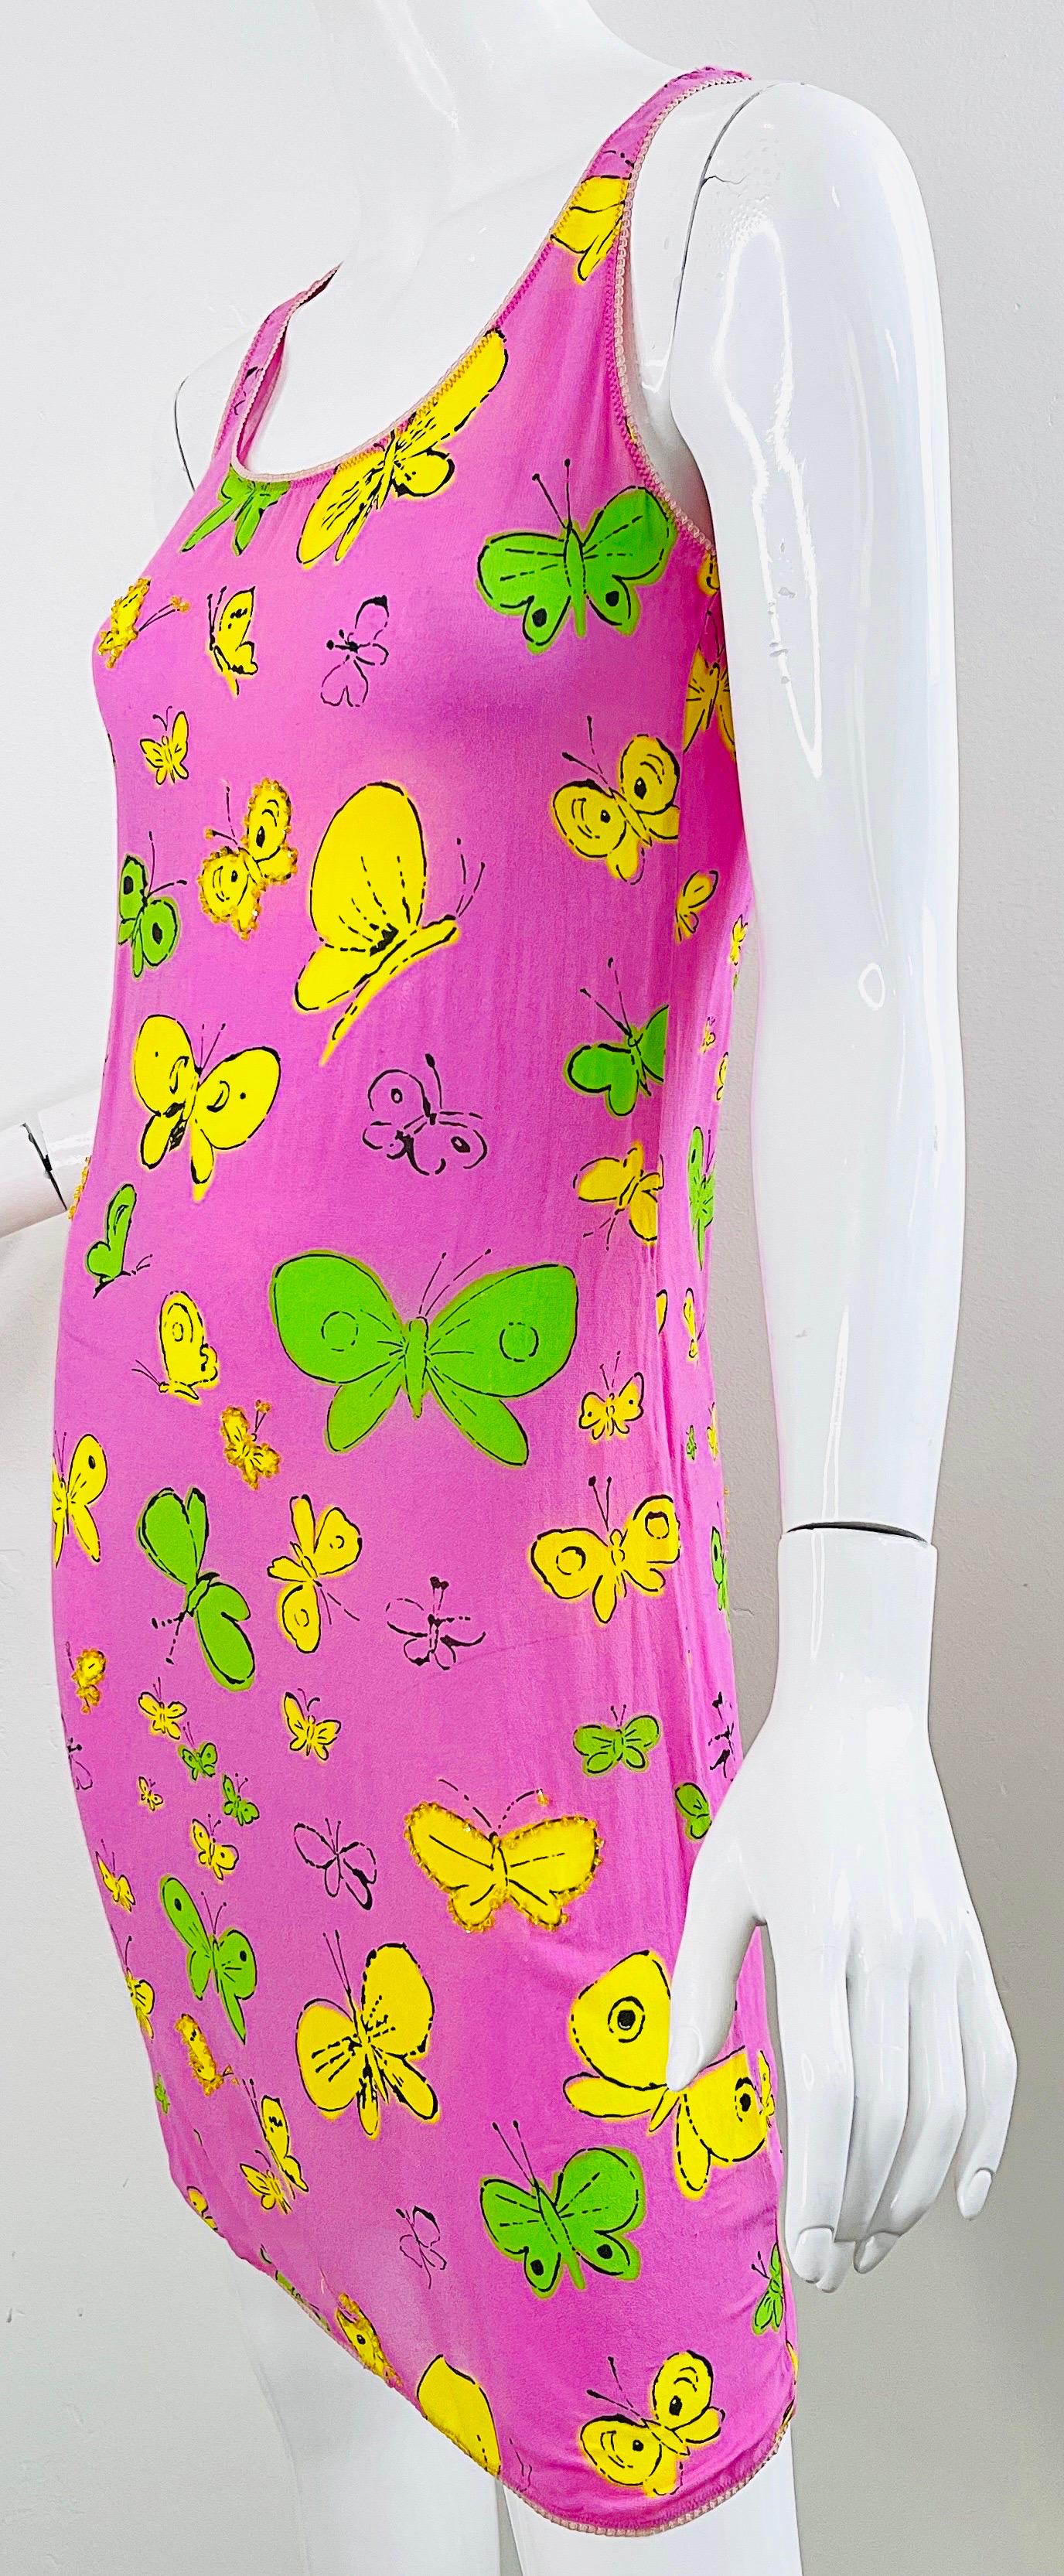 BARBIE 1990s Versus Gianni Versace Bubblegum Pink Beads Butterfly Dress Cardigan For Sale 6